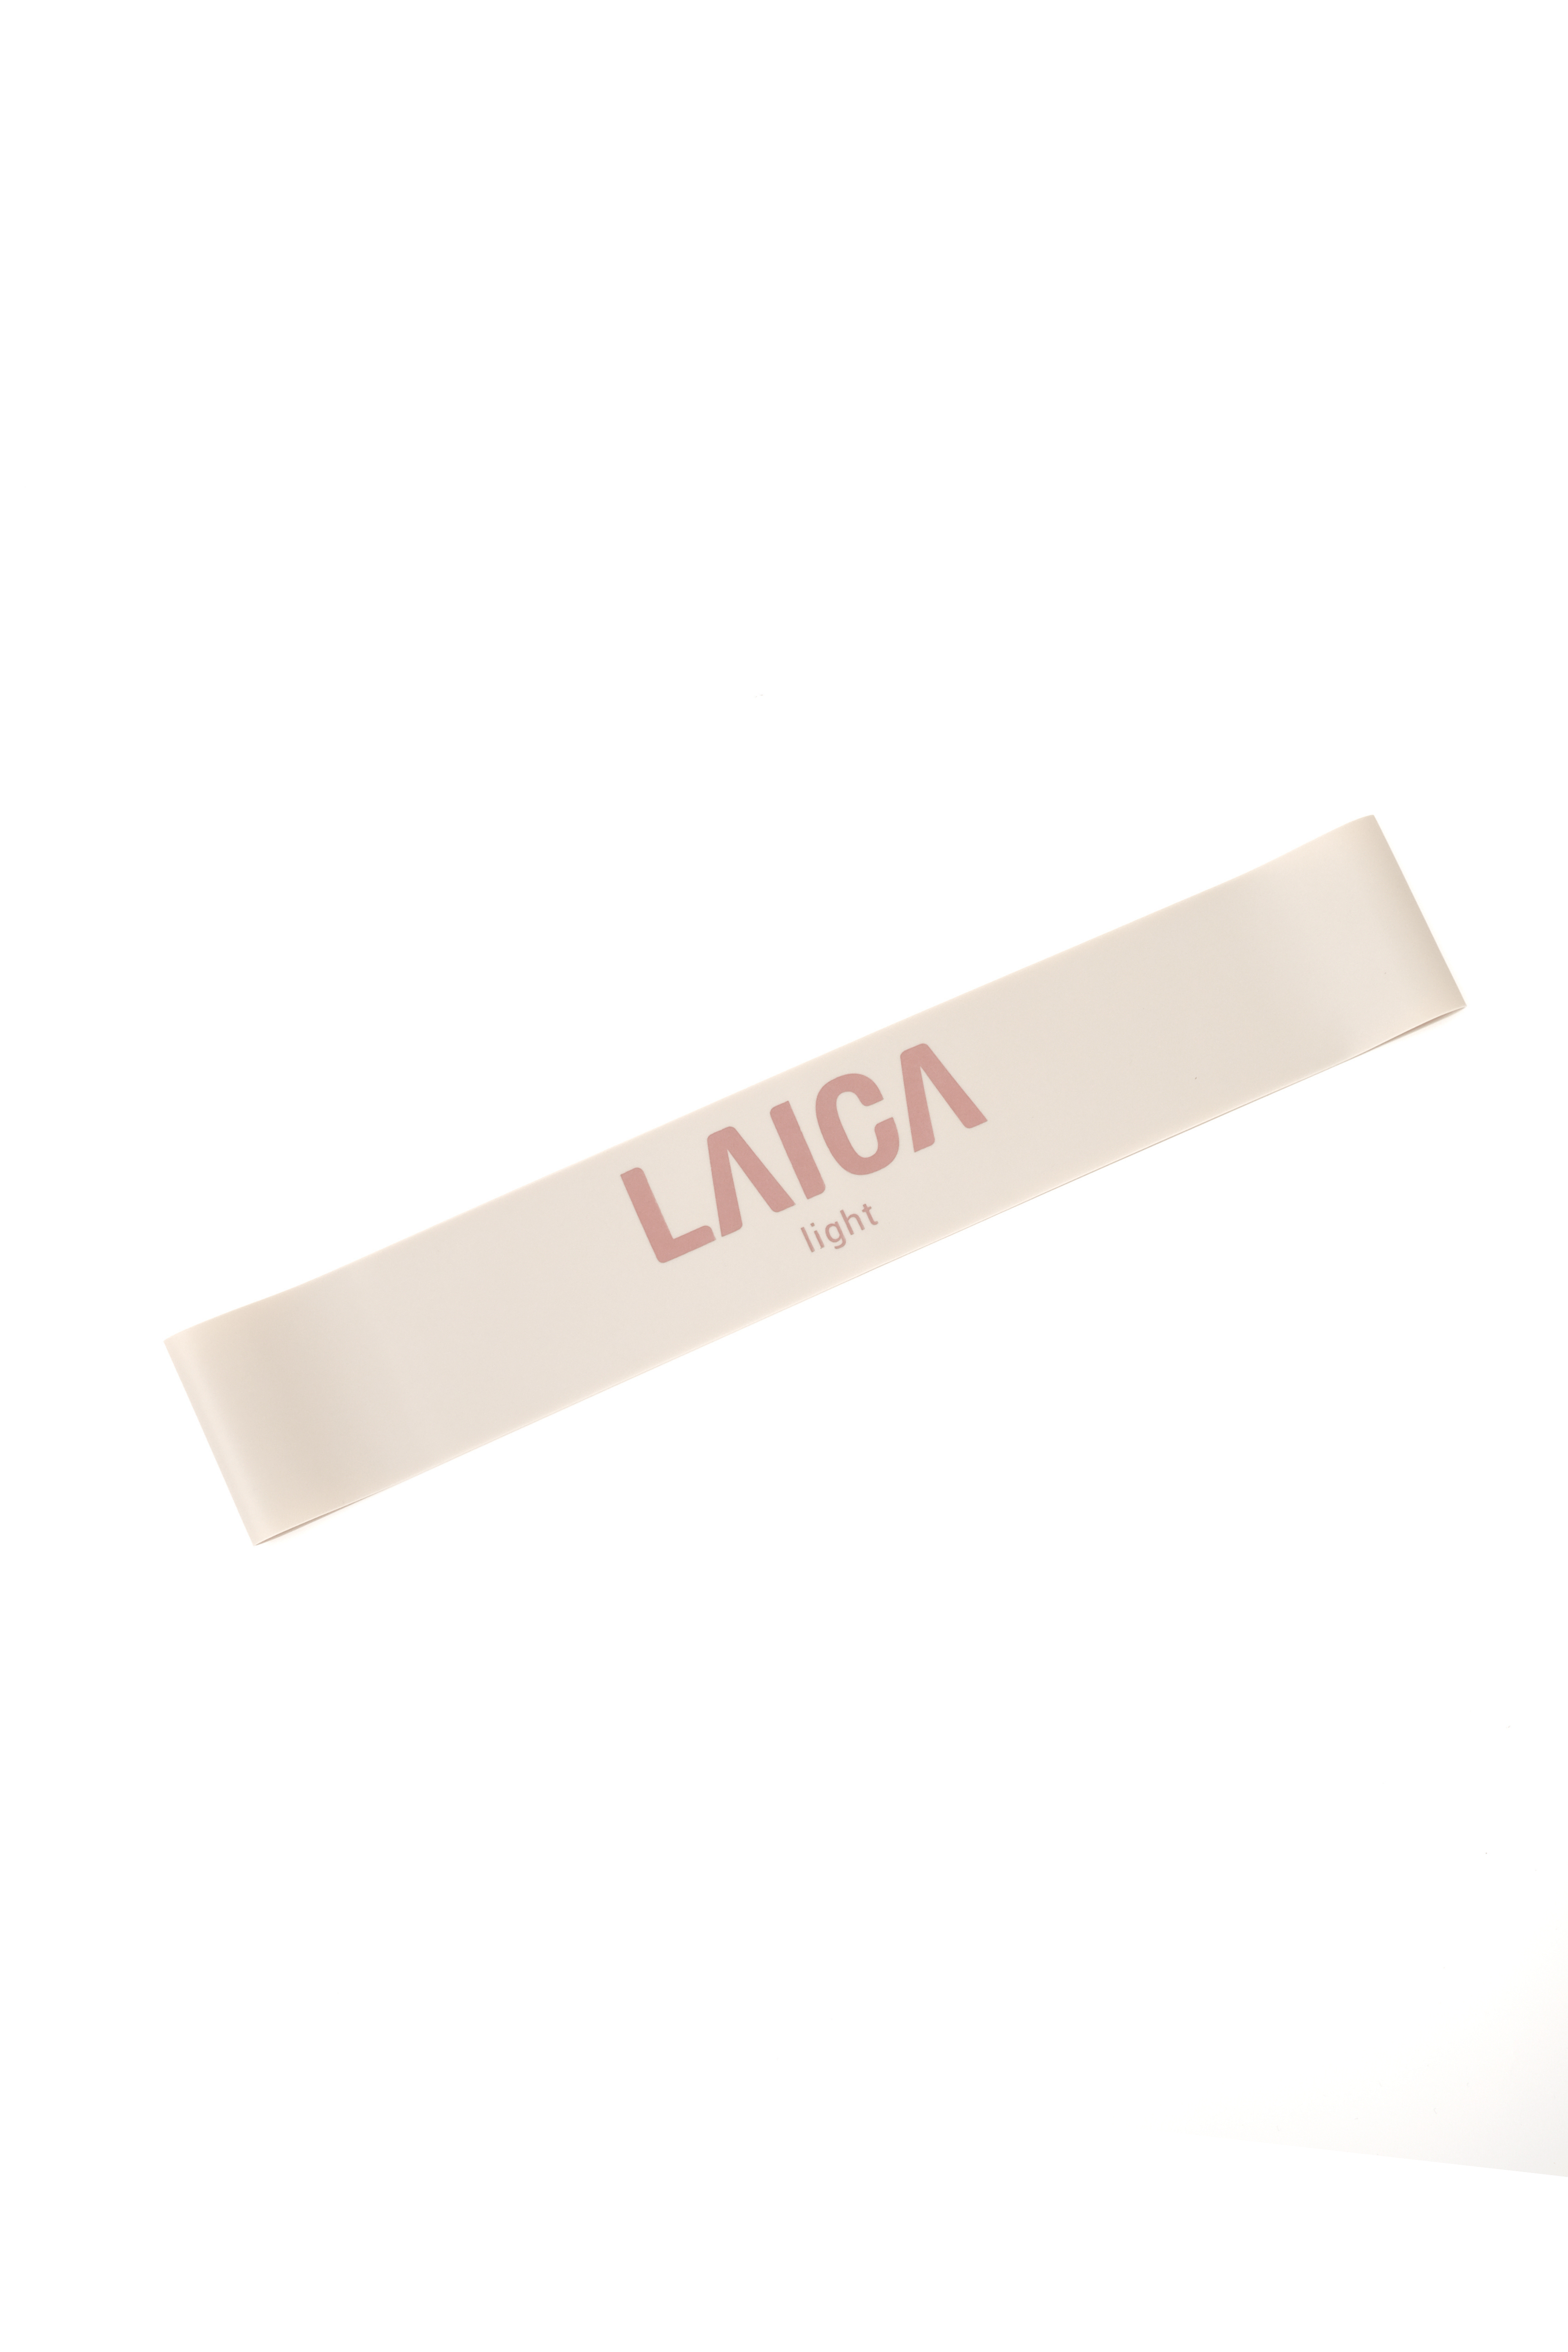 LAICA Resistance Loop Bands - Lilac